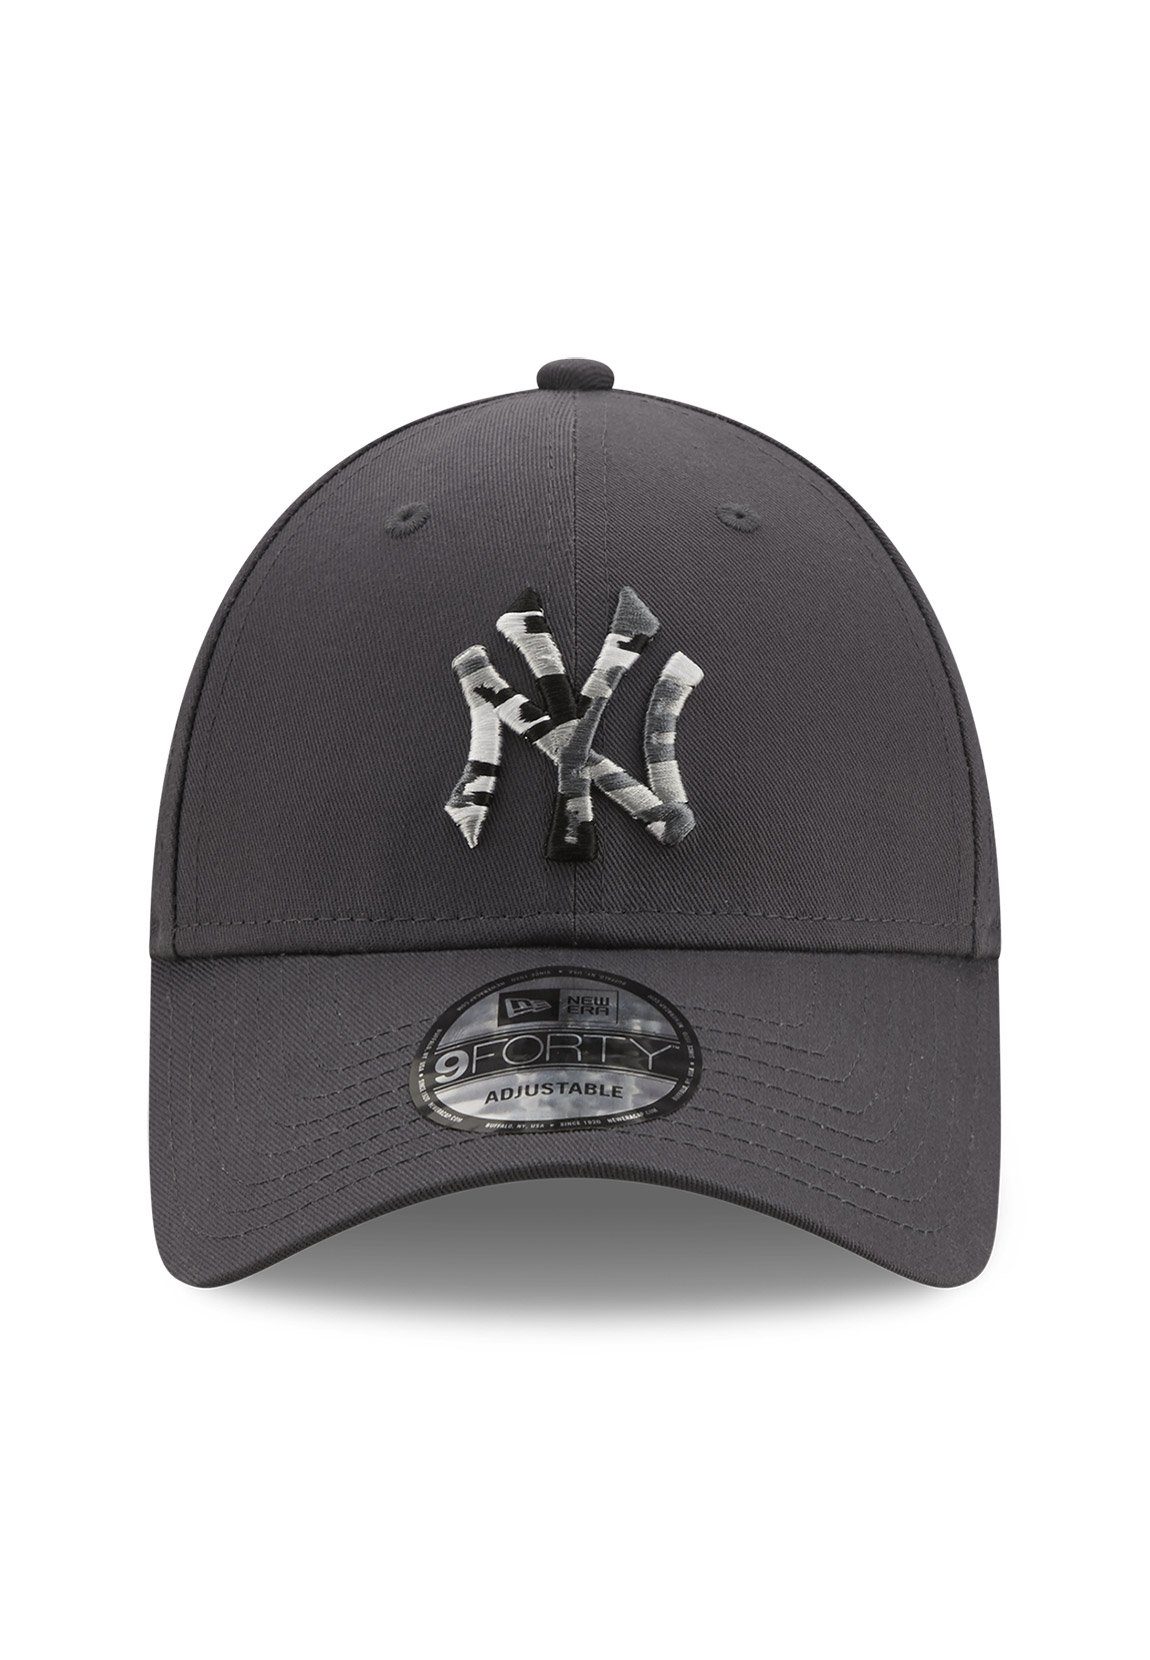 Baseball Dunkelgrau New NY New Cap Cap Camo Adjustable Era 9Forty YANKEES Era Infill